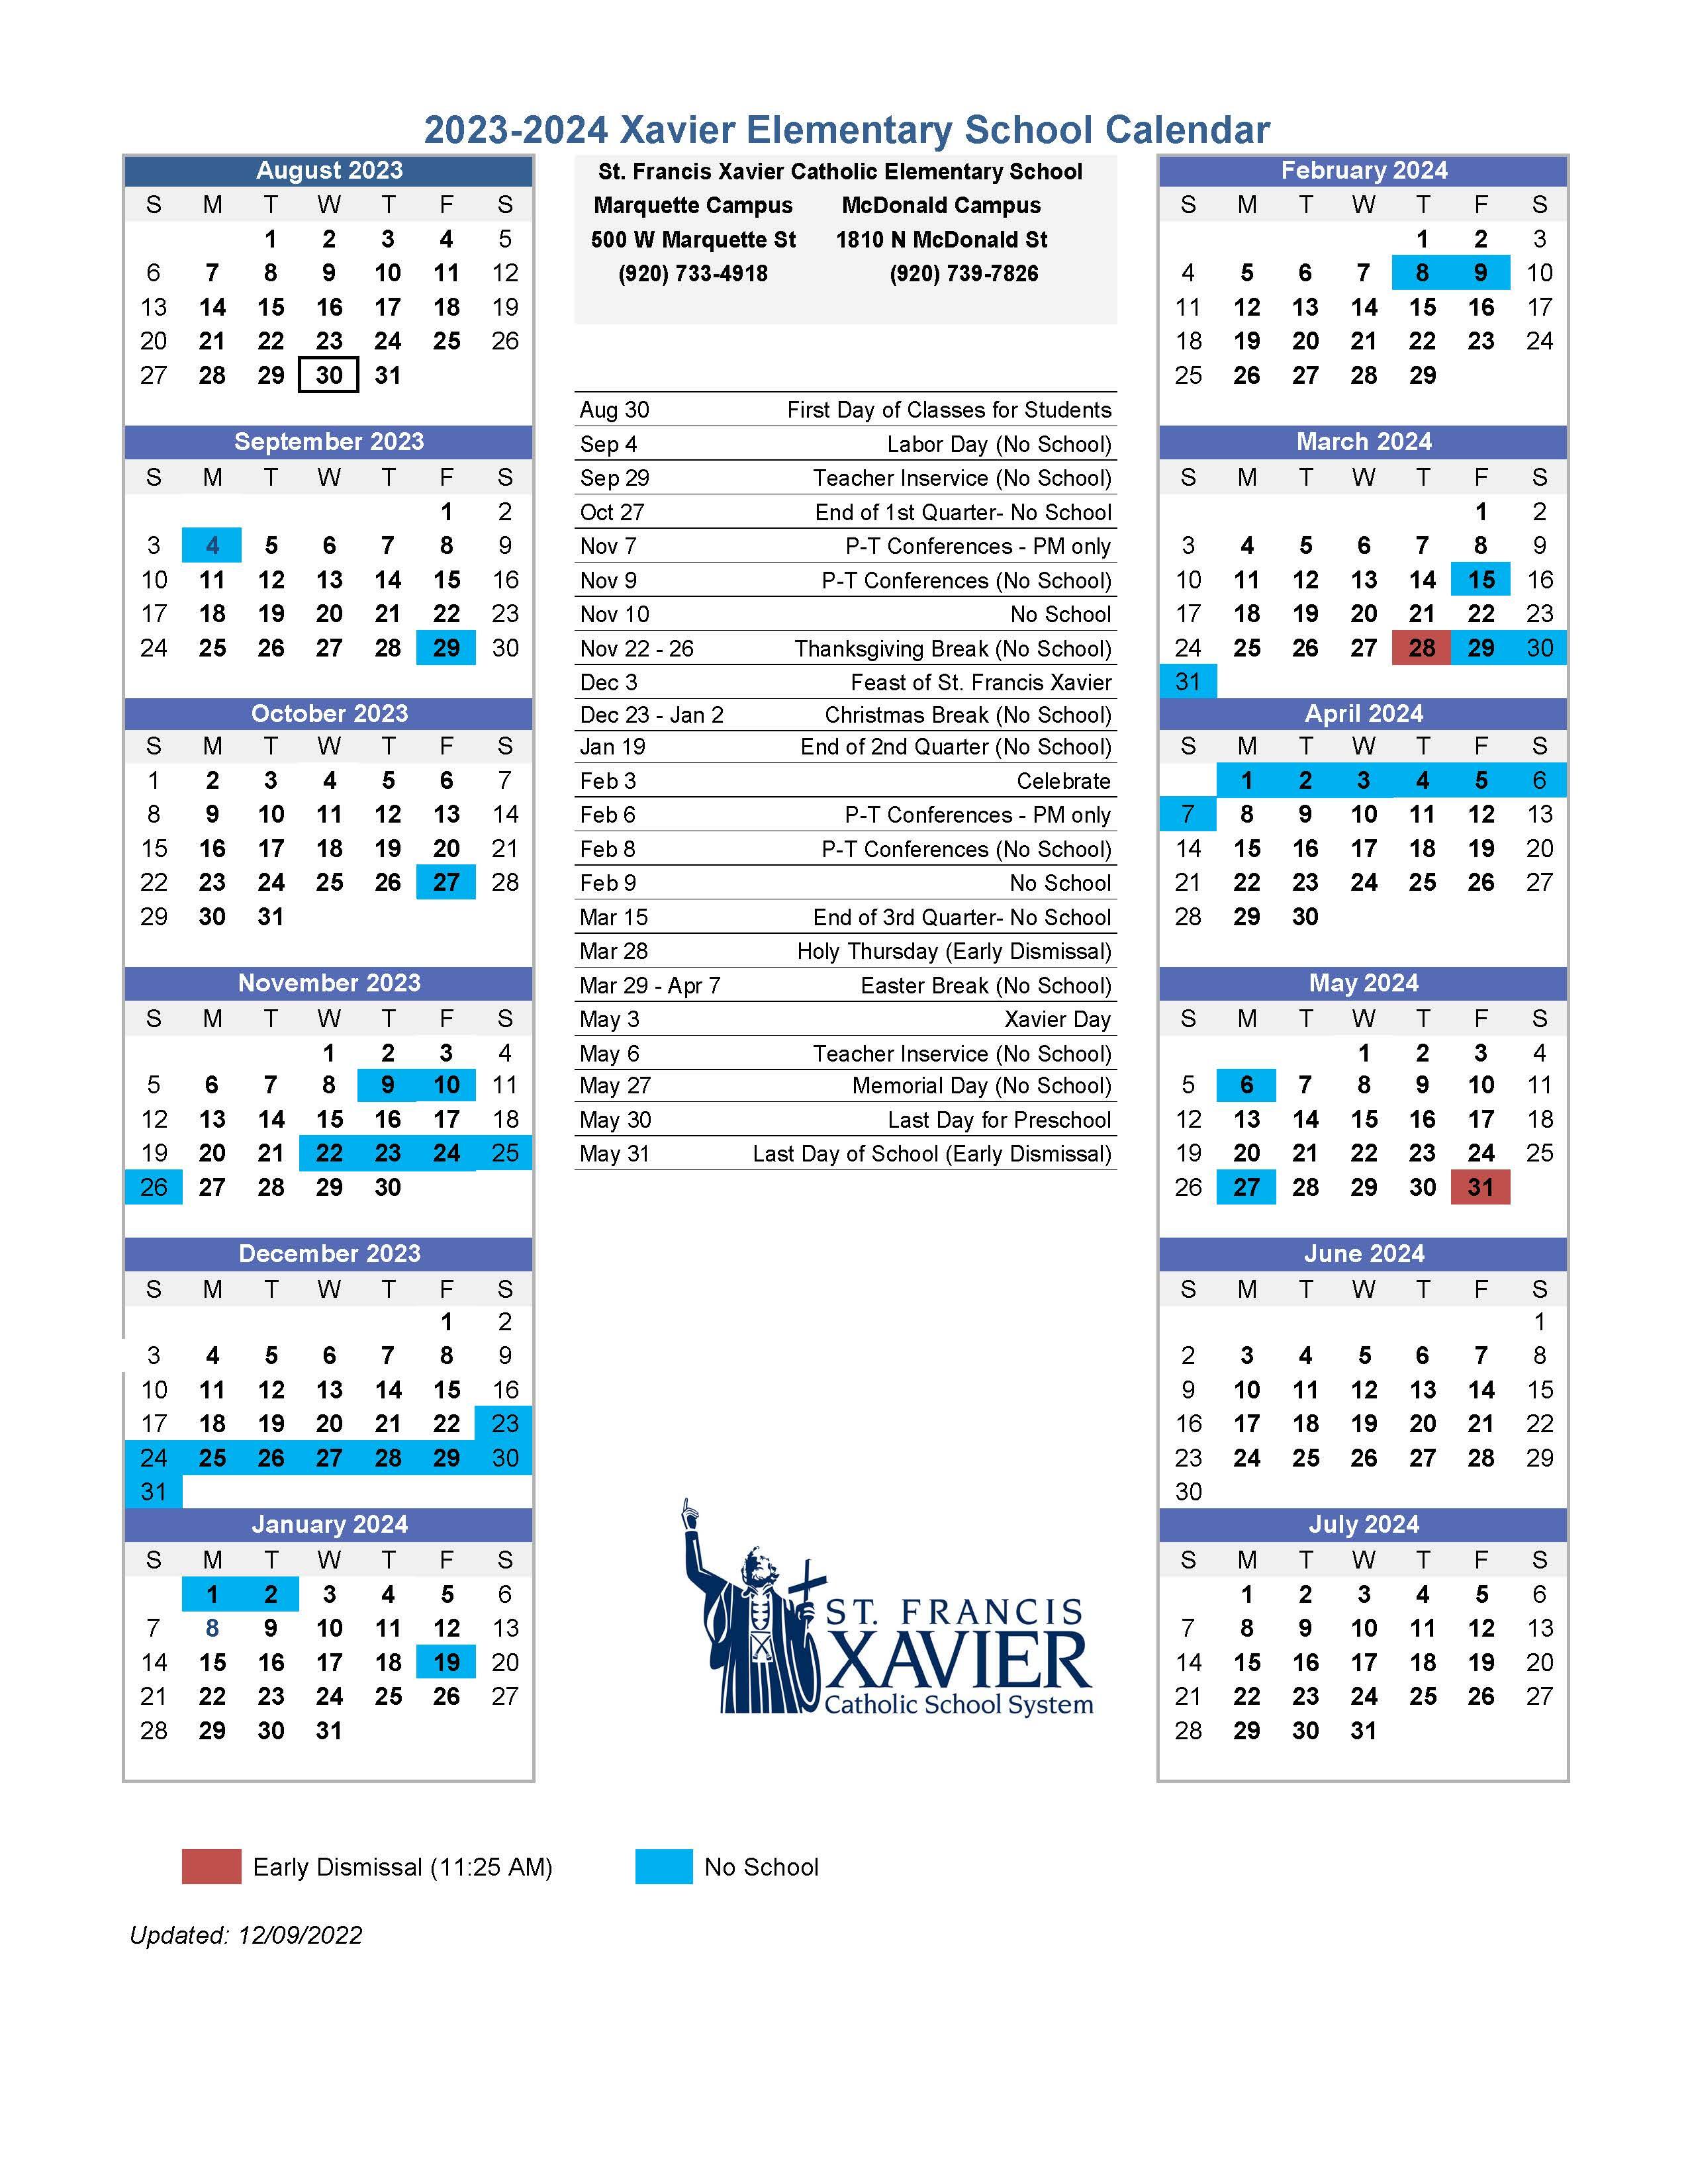 Xavier Elementary 2023-2024 Academic Calendar